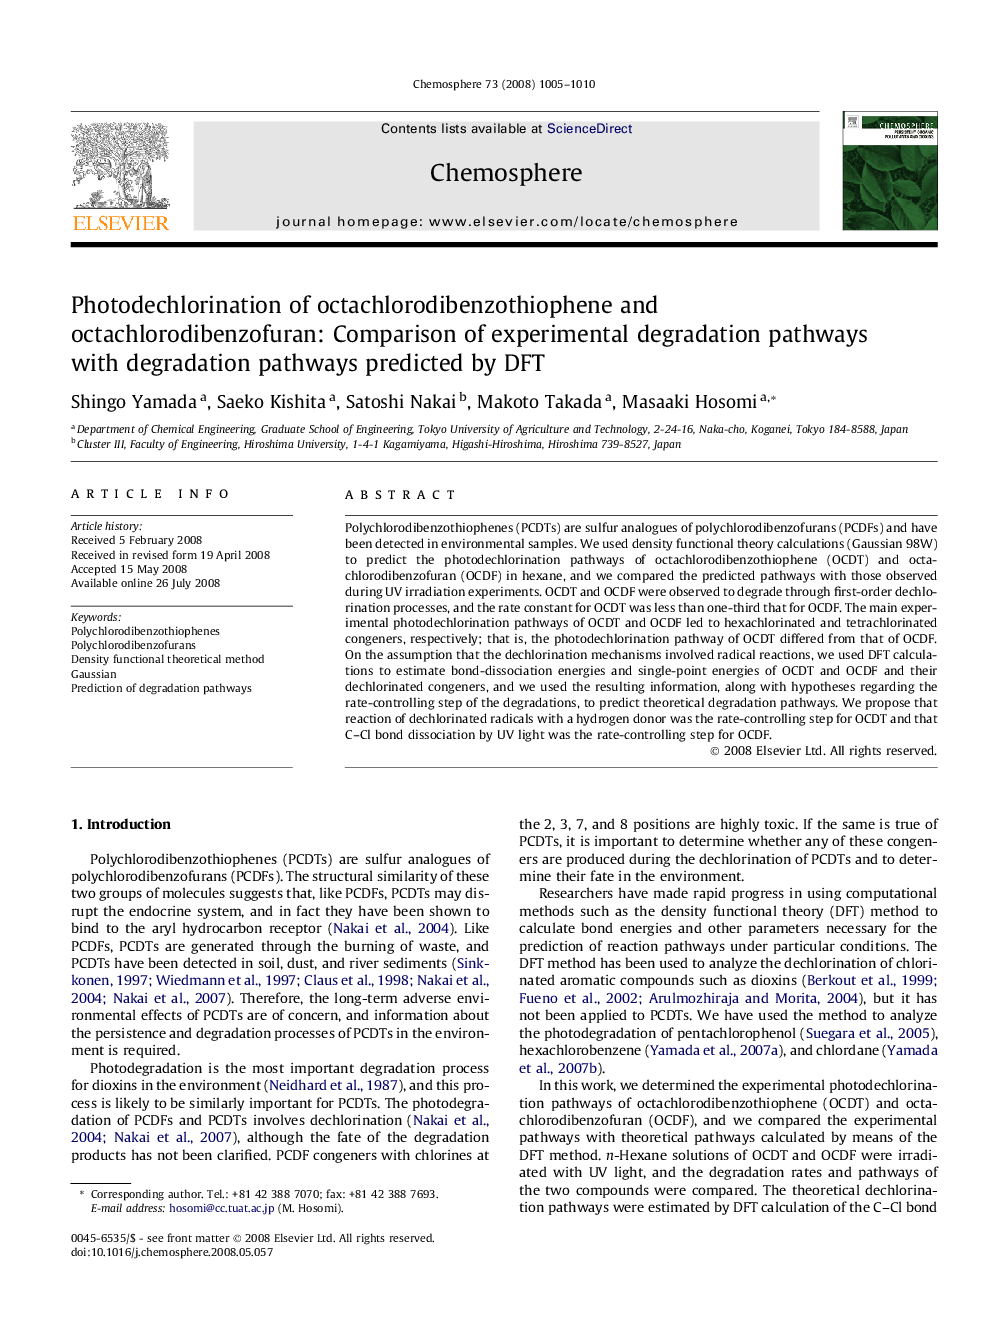 Photodechlorination of octachlorodibenzothiophene and octachlorodibenzofuran: Comparison of experimental degradation pathways with degradation pathways predicted by DFT